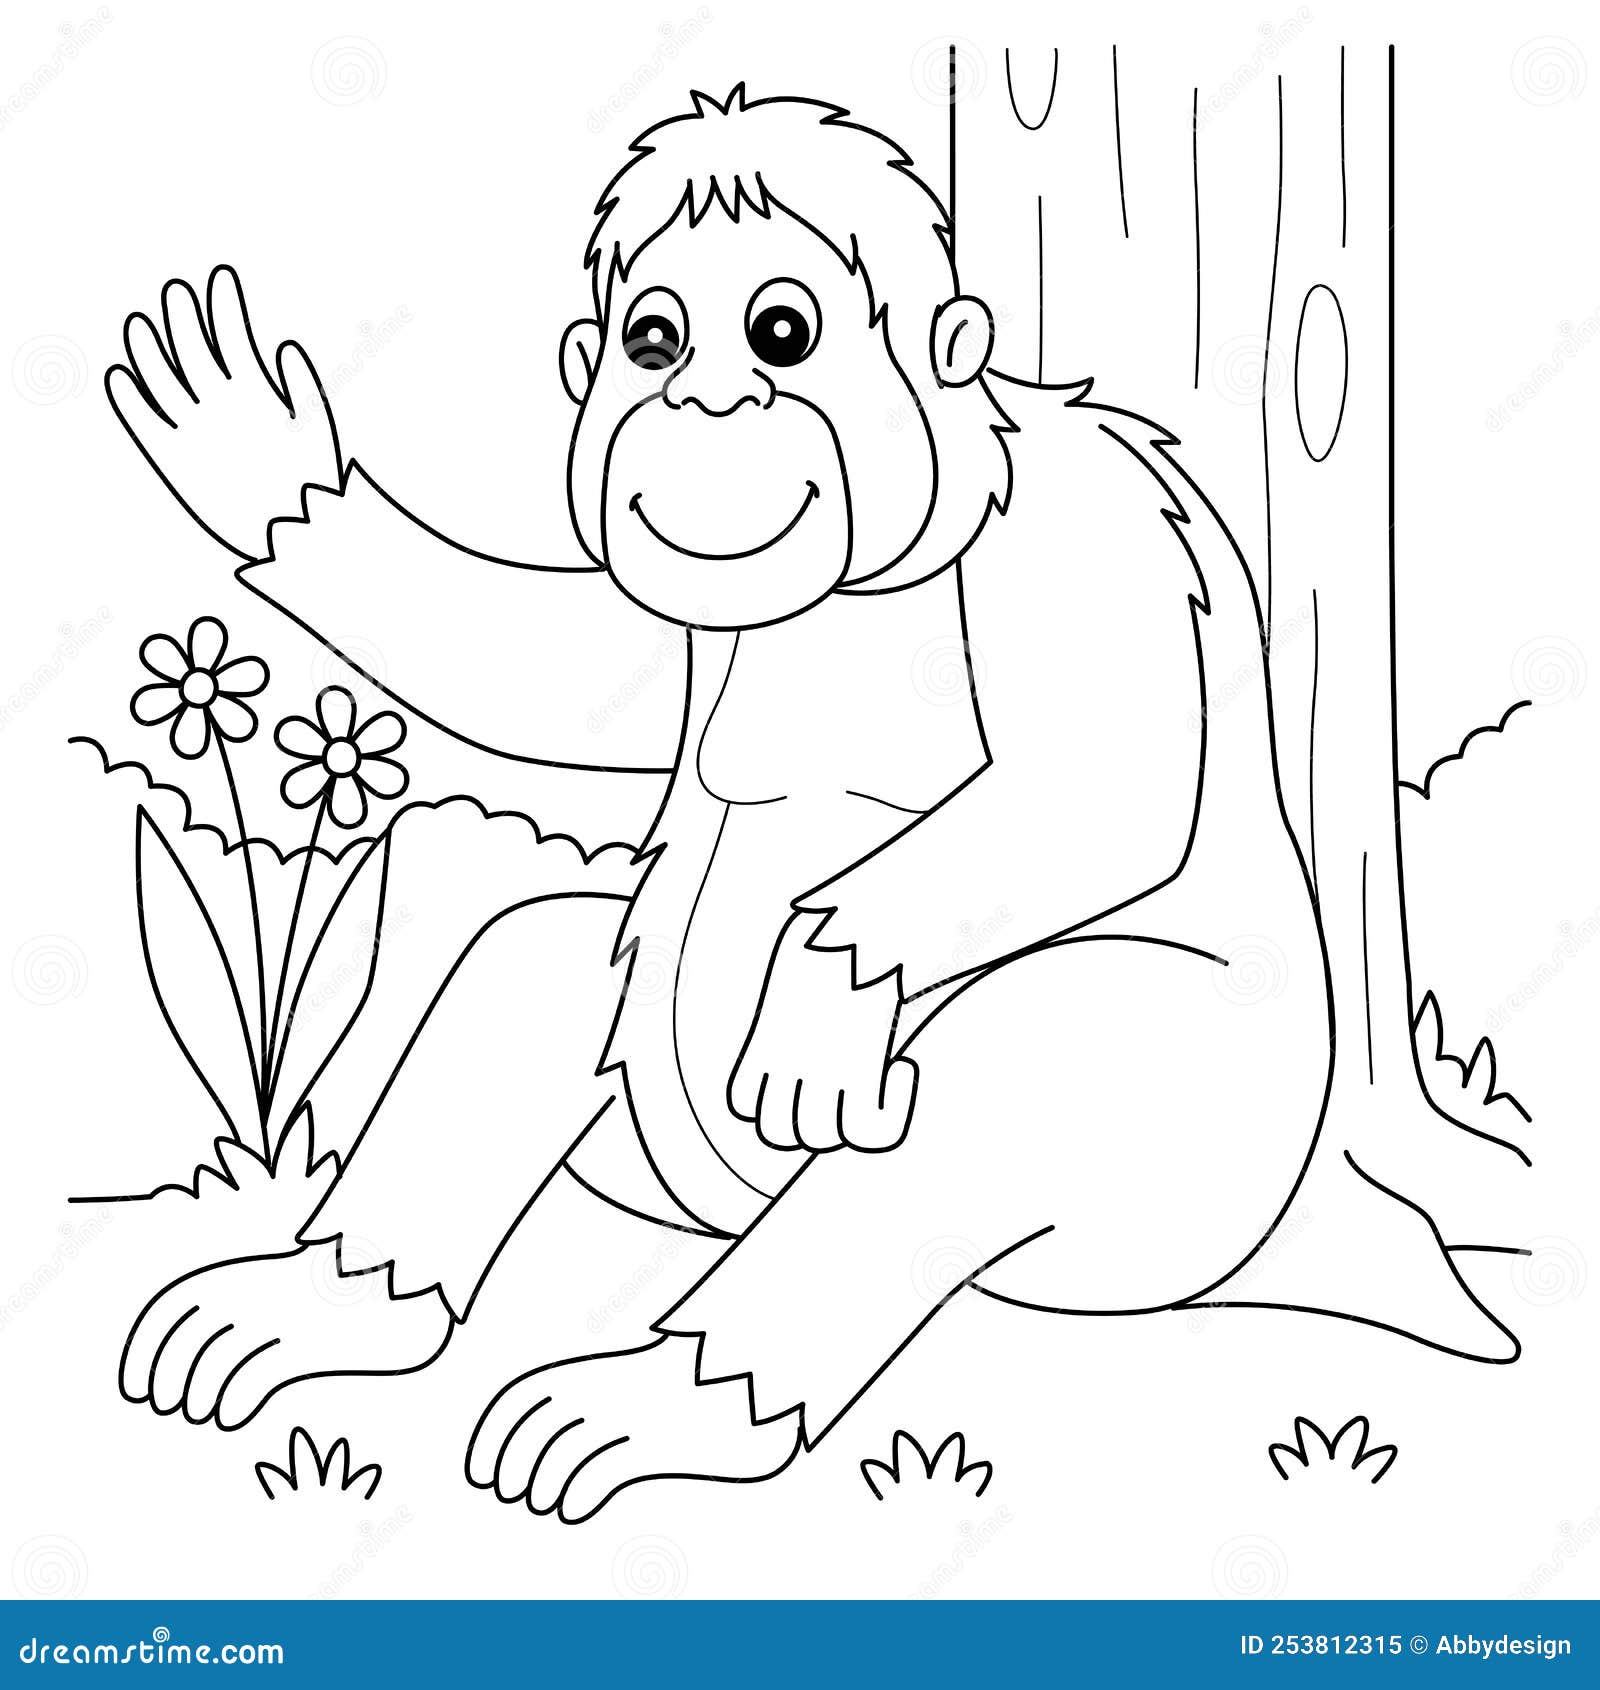 Orangutan animal coloring page for kids stock vector